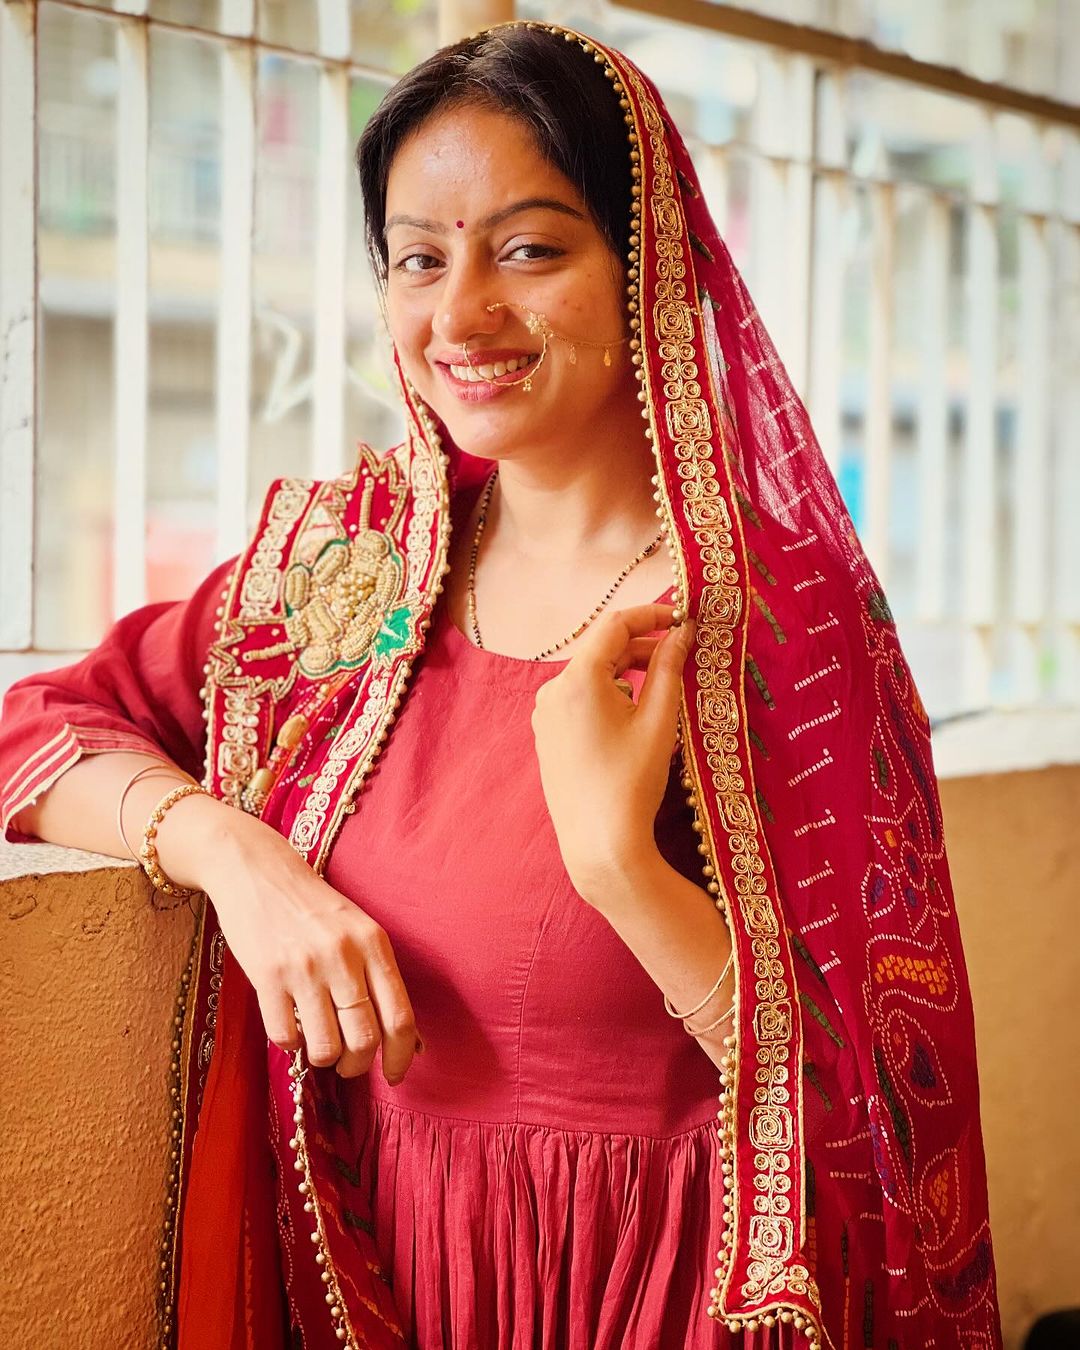 Divine Vibes! Our Telly Queen Deepika Singh Celebrates The Gangaur Festival. Let’s Discuss It!